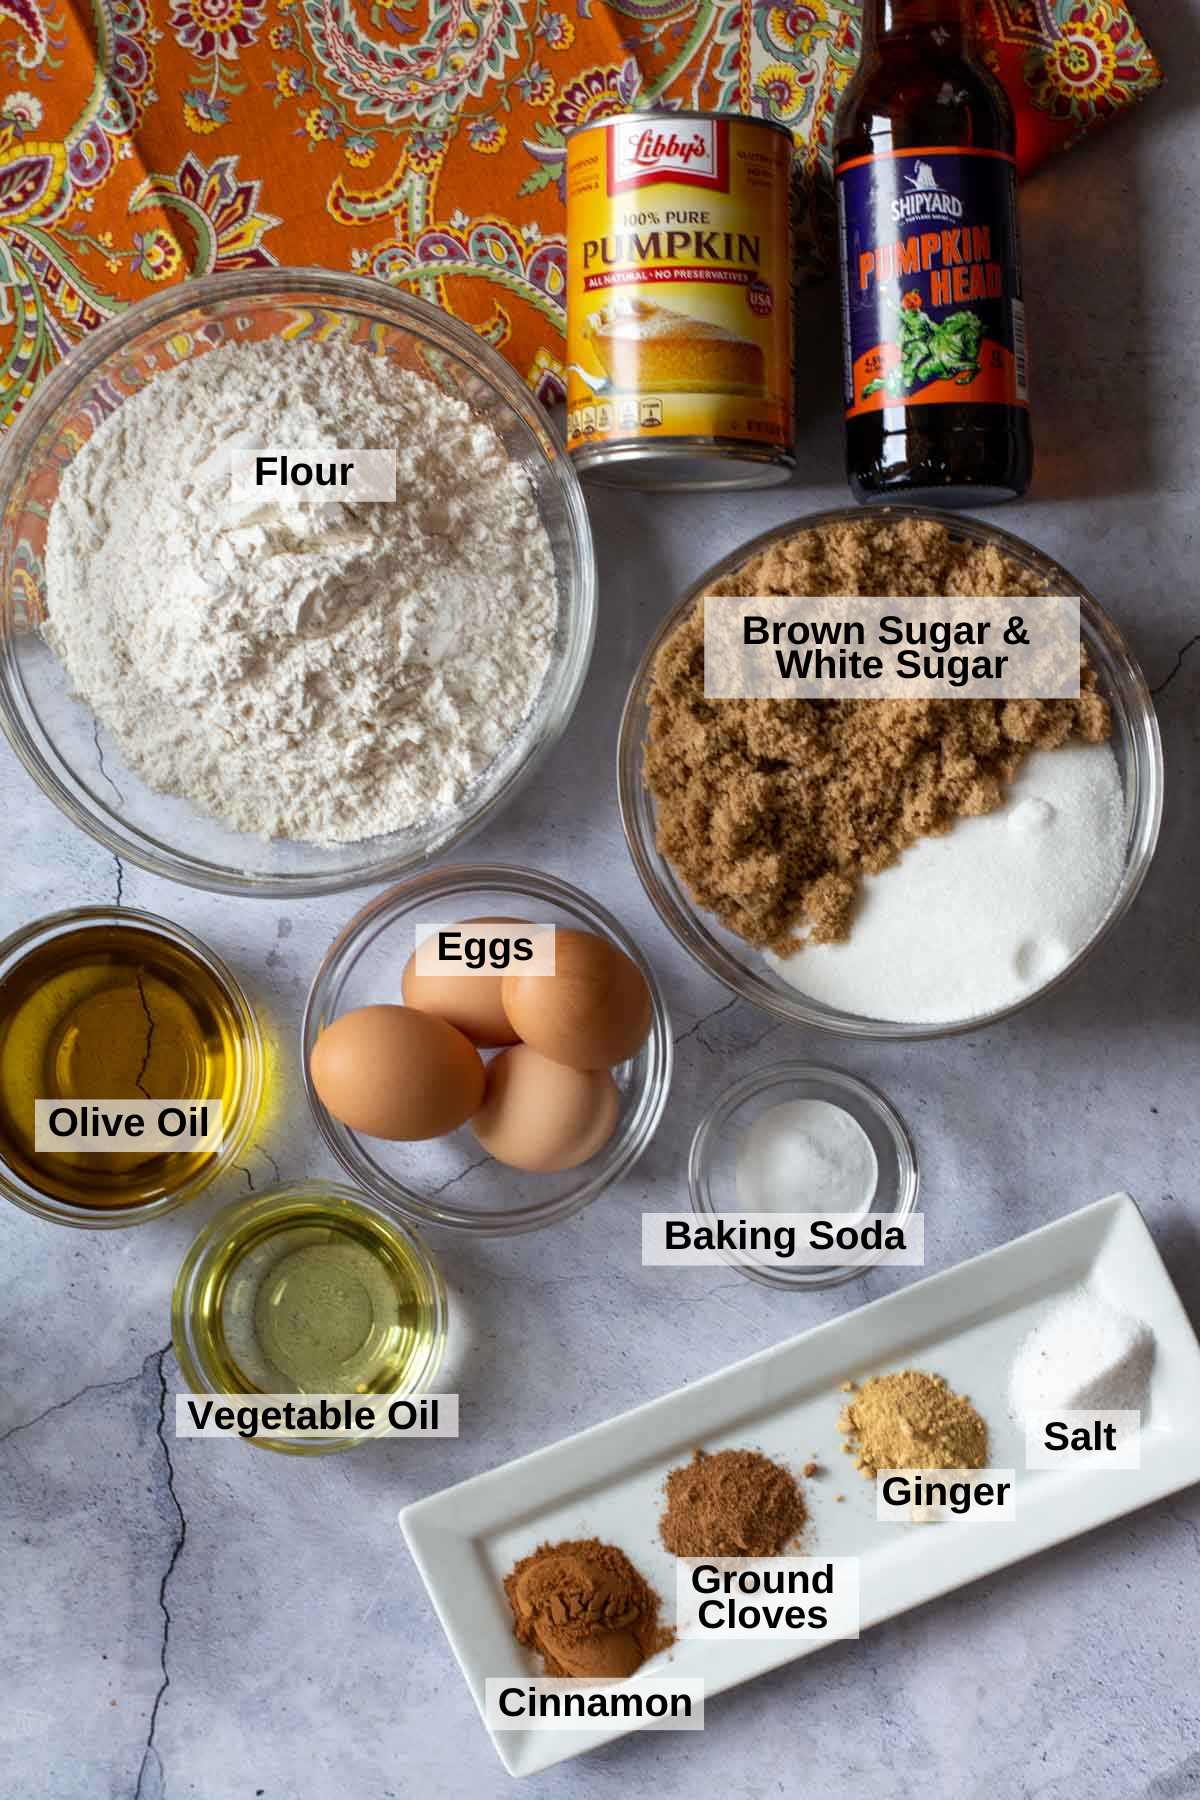 Ingredients to make pumpkin spice bread with pumpkin beer.